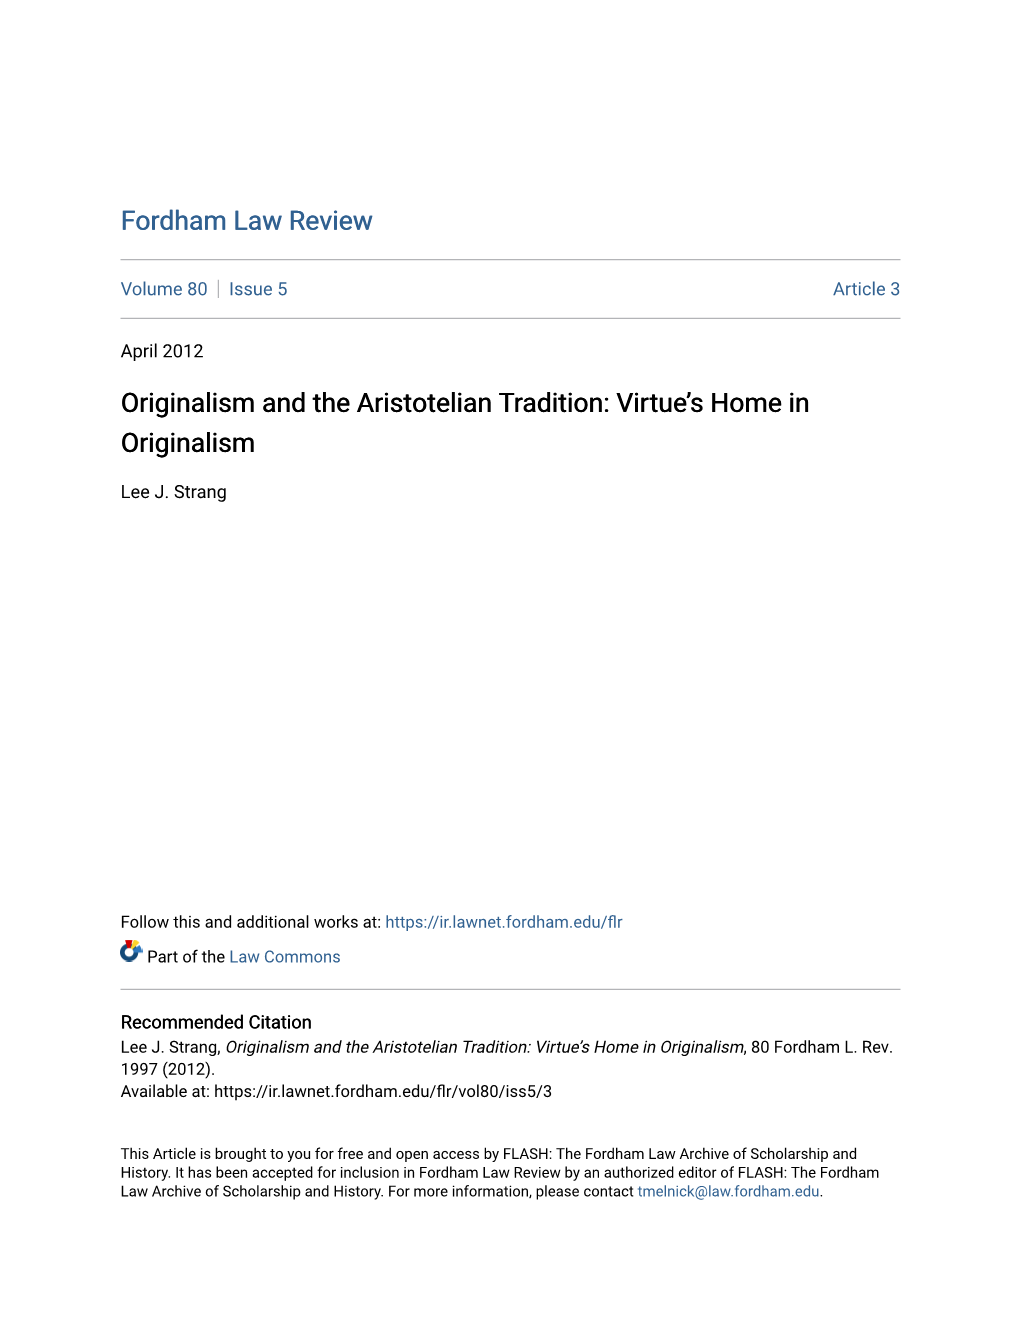 Originalism and the Aristotelian Tradition: Virtue’S Home in Originalism